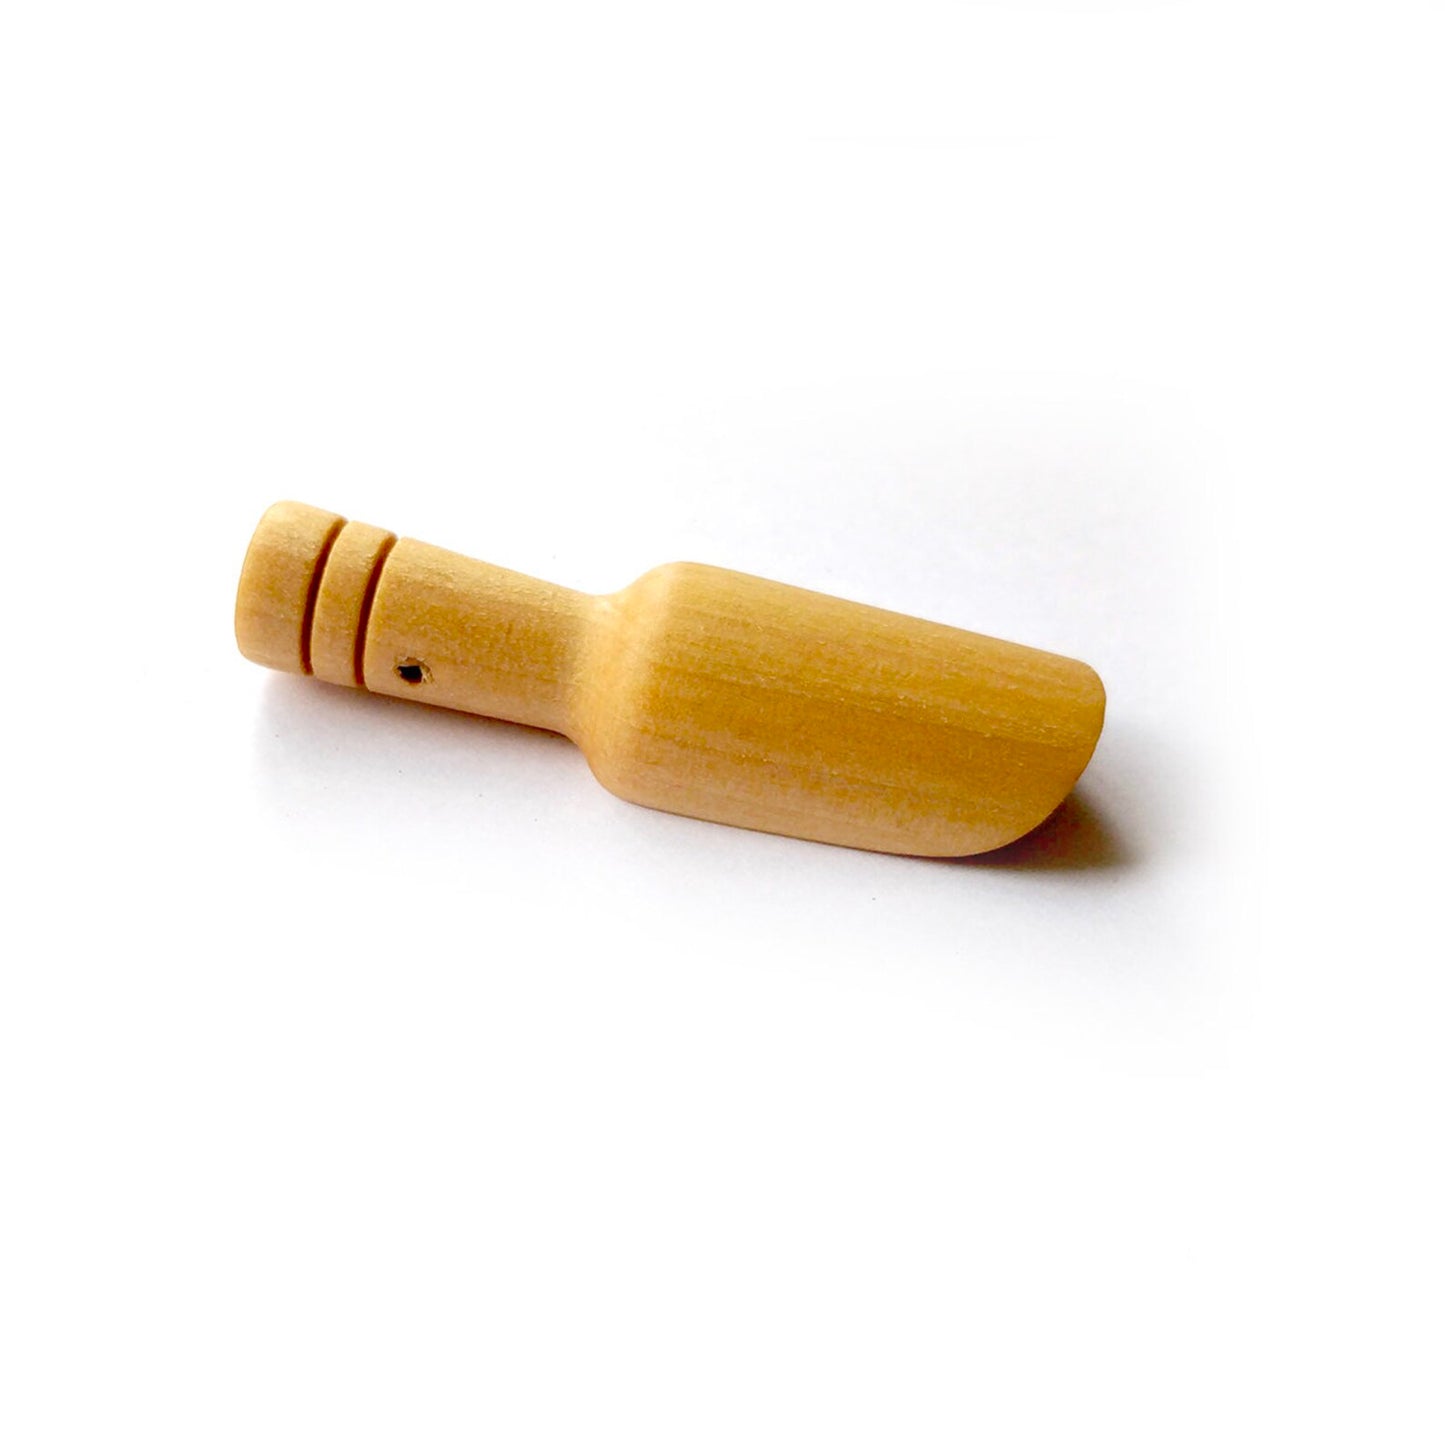 Small Wooden Scoop | Spoon